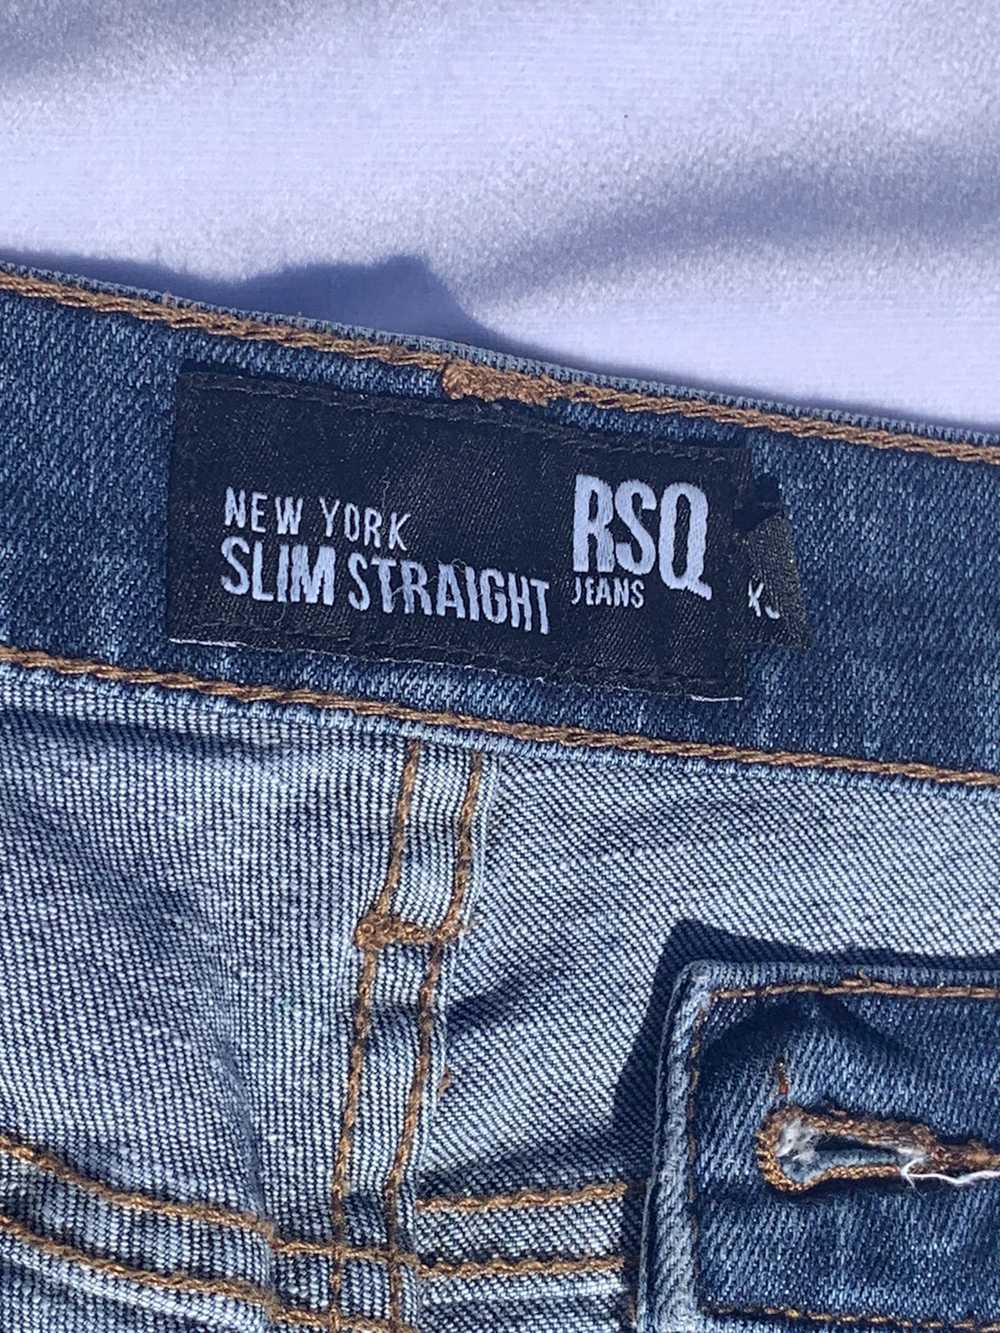 Rsq RSQ Mens Slim Straight Jeans - image 3